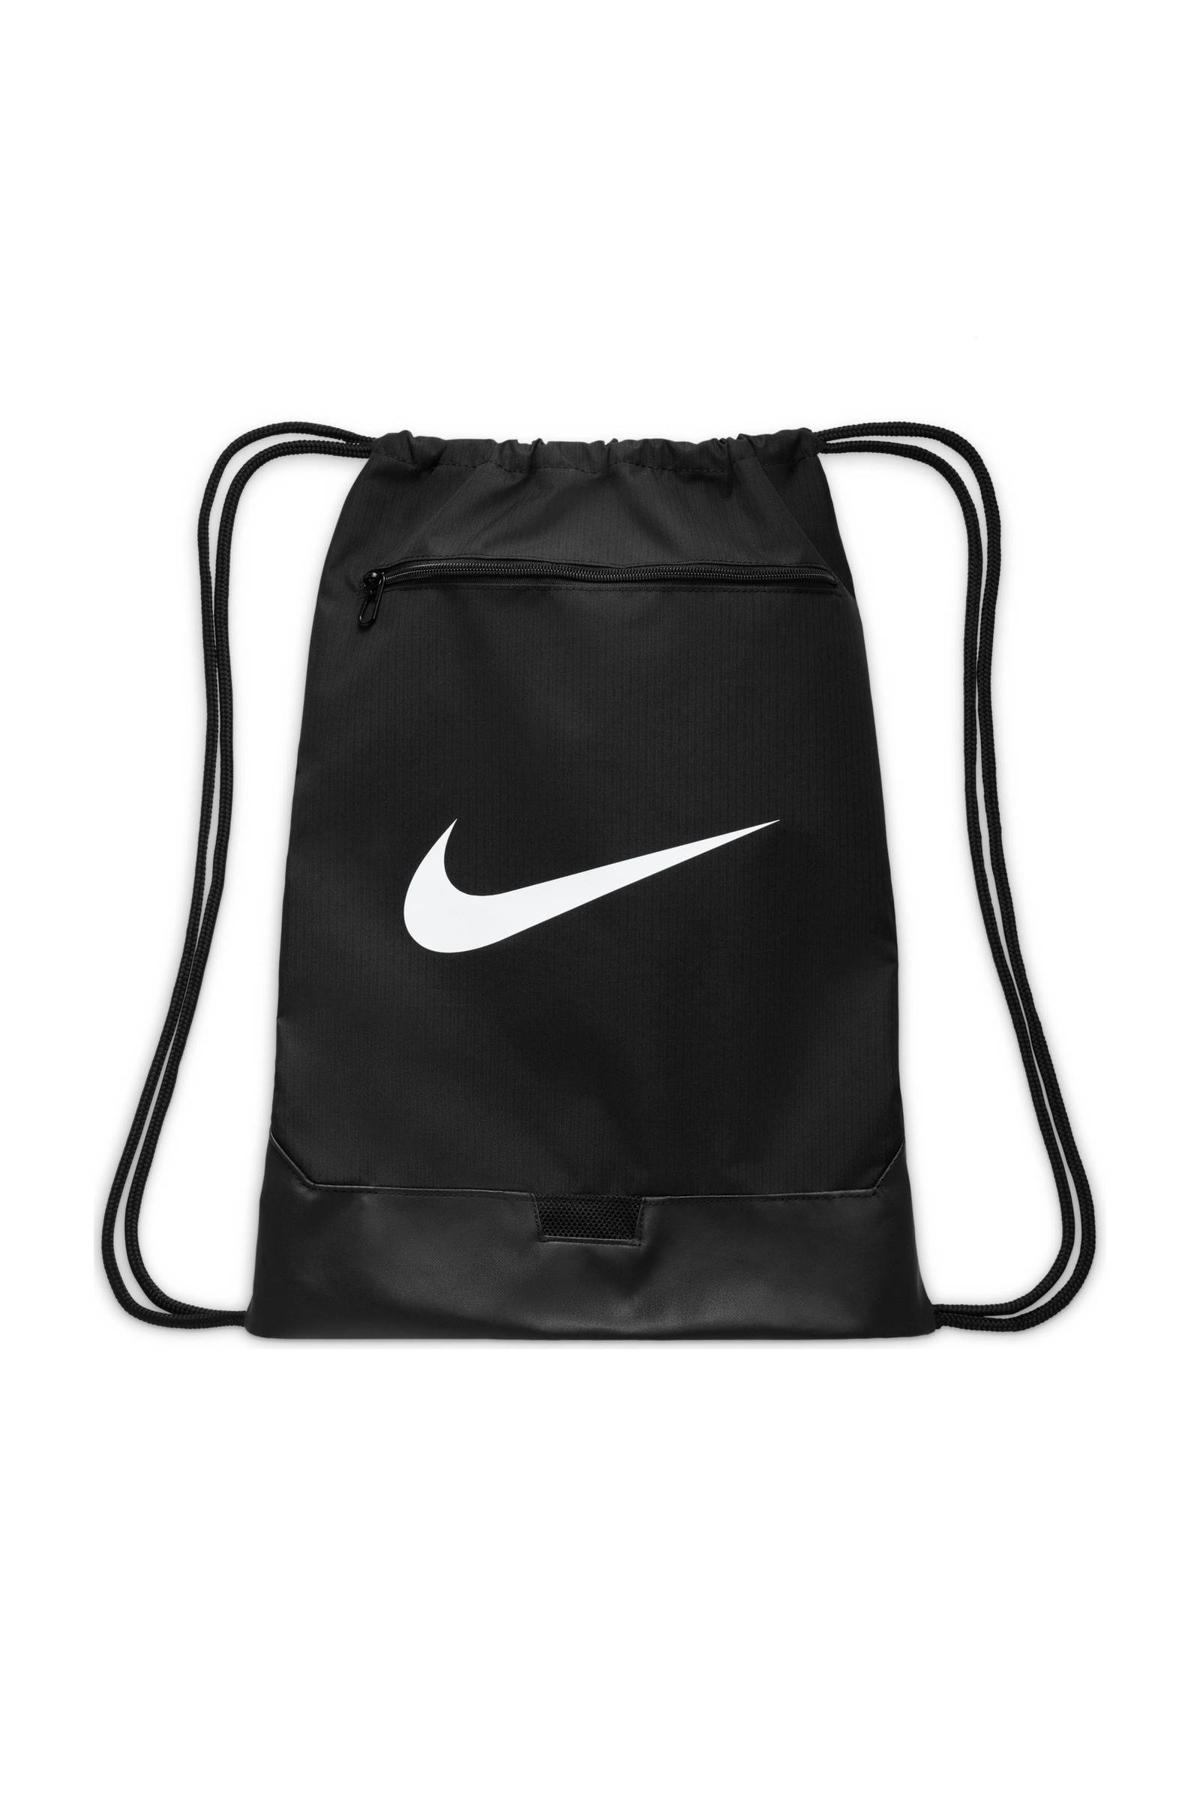 ontwikkeling avontuur Michelangelo Nike sporttas Brasilia 9.5 (18 liter) zwart/wit | wehkamp